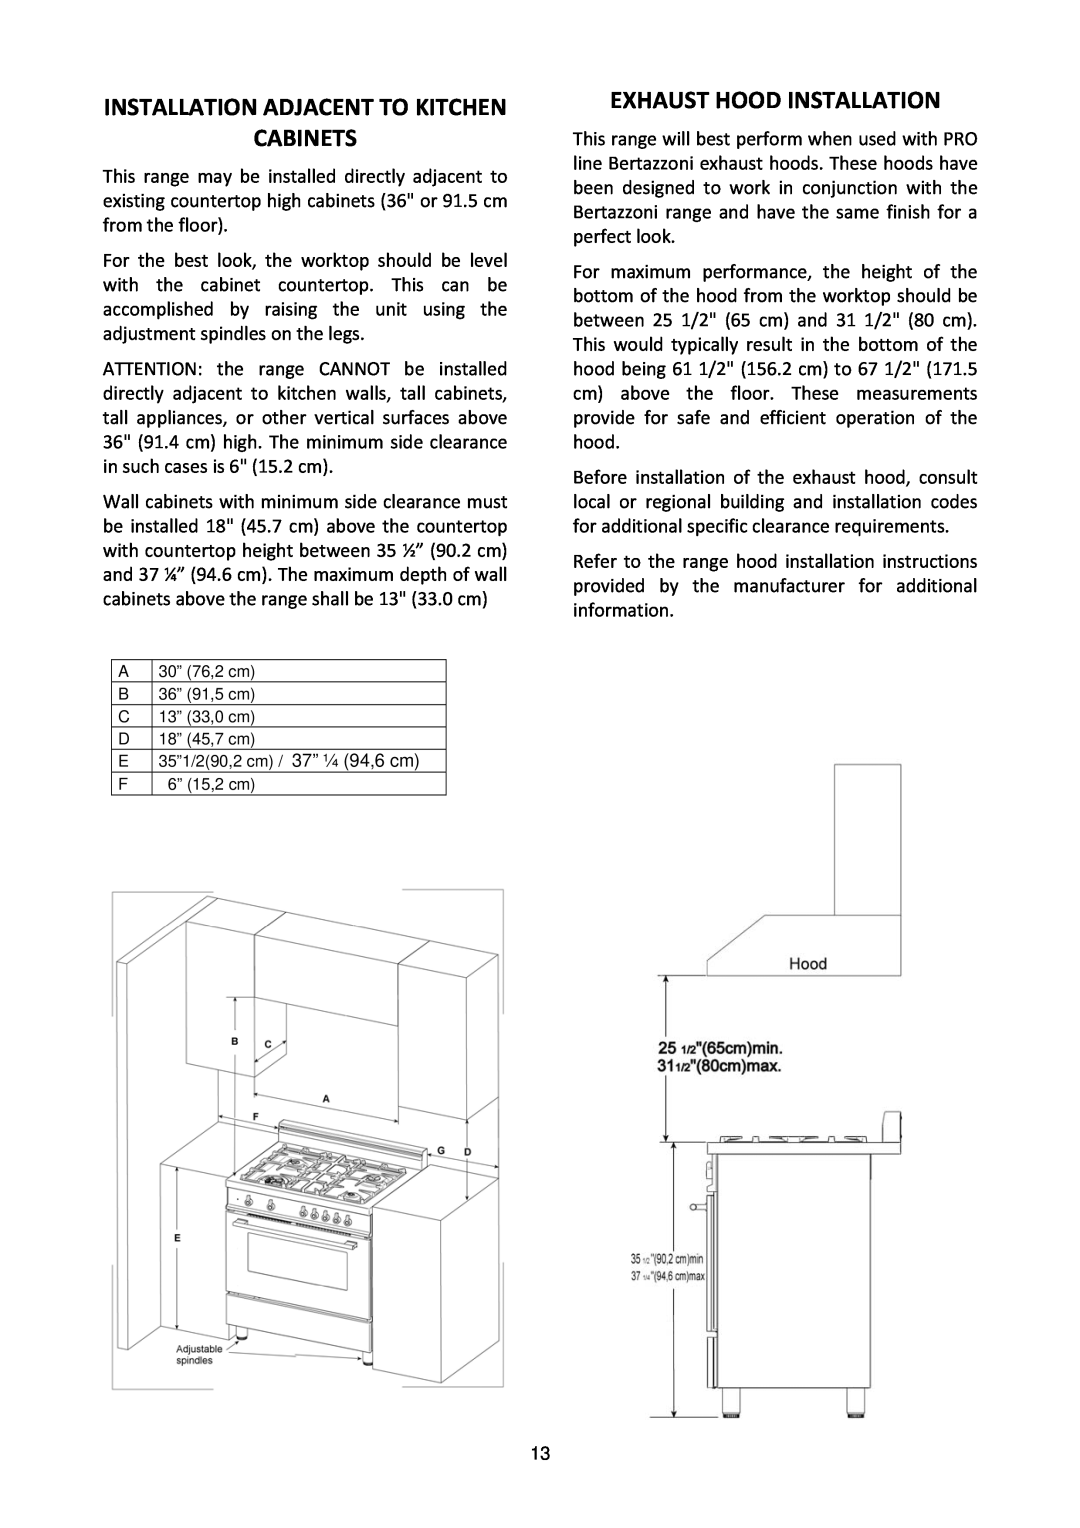 Bertazzoni M7S06ZA7X5DUG, MAS304DFMXE manual Installation Adjacent To Kitchen Cabinets, Exhaust Hood Installation 